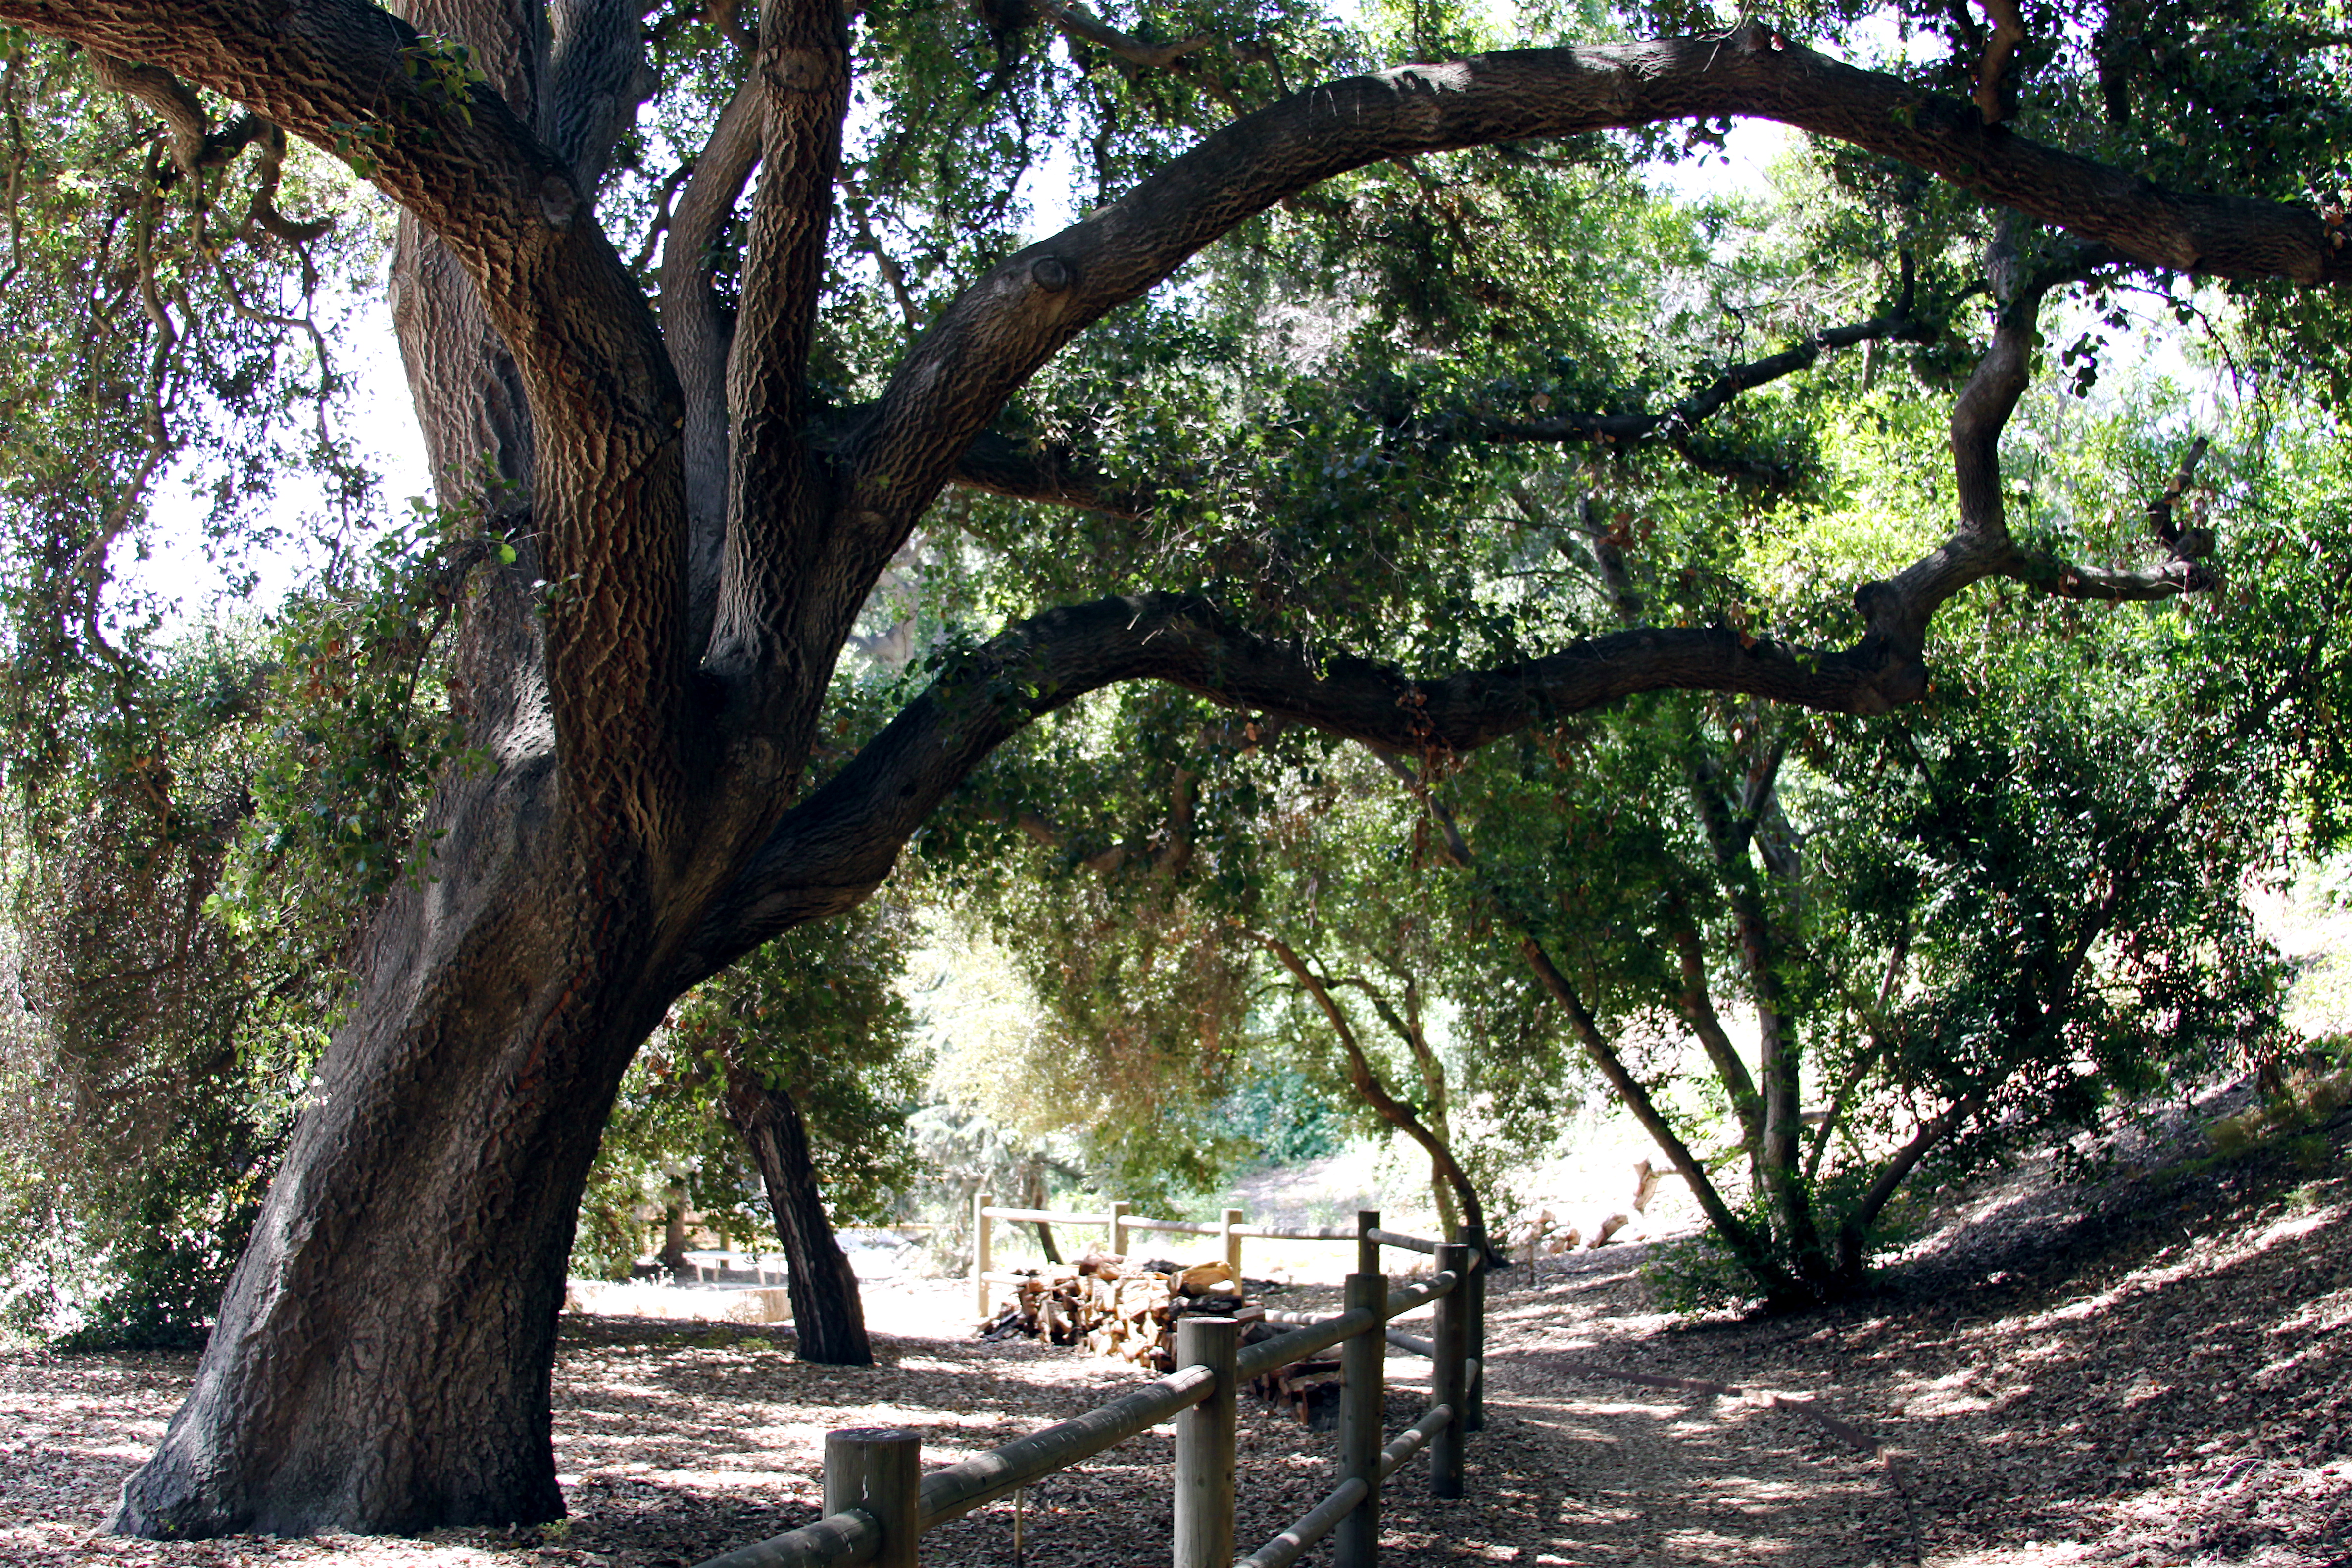 Rancho Santa Ana Botanic Garden Photographyfree4all S Blog